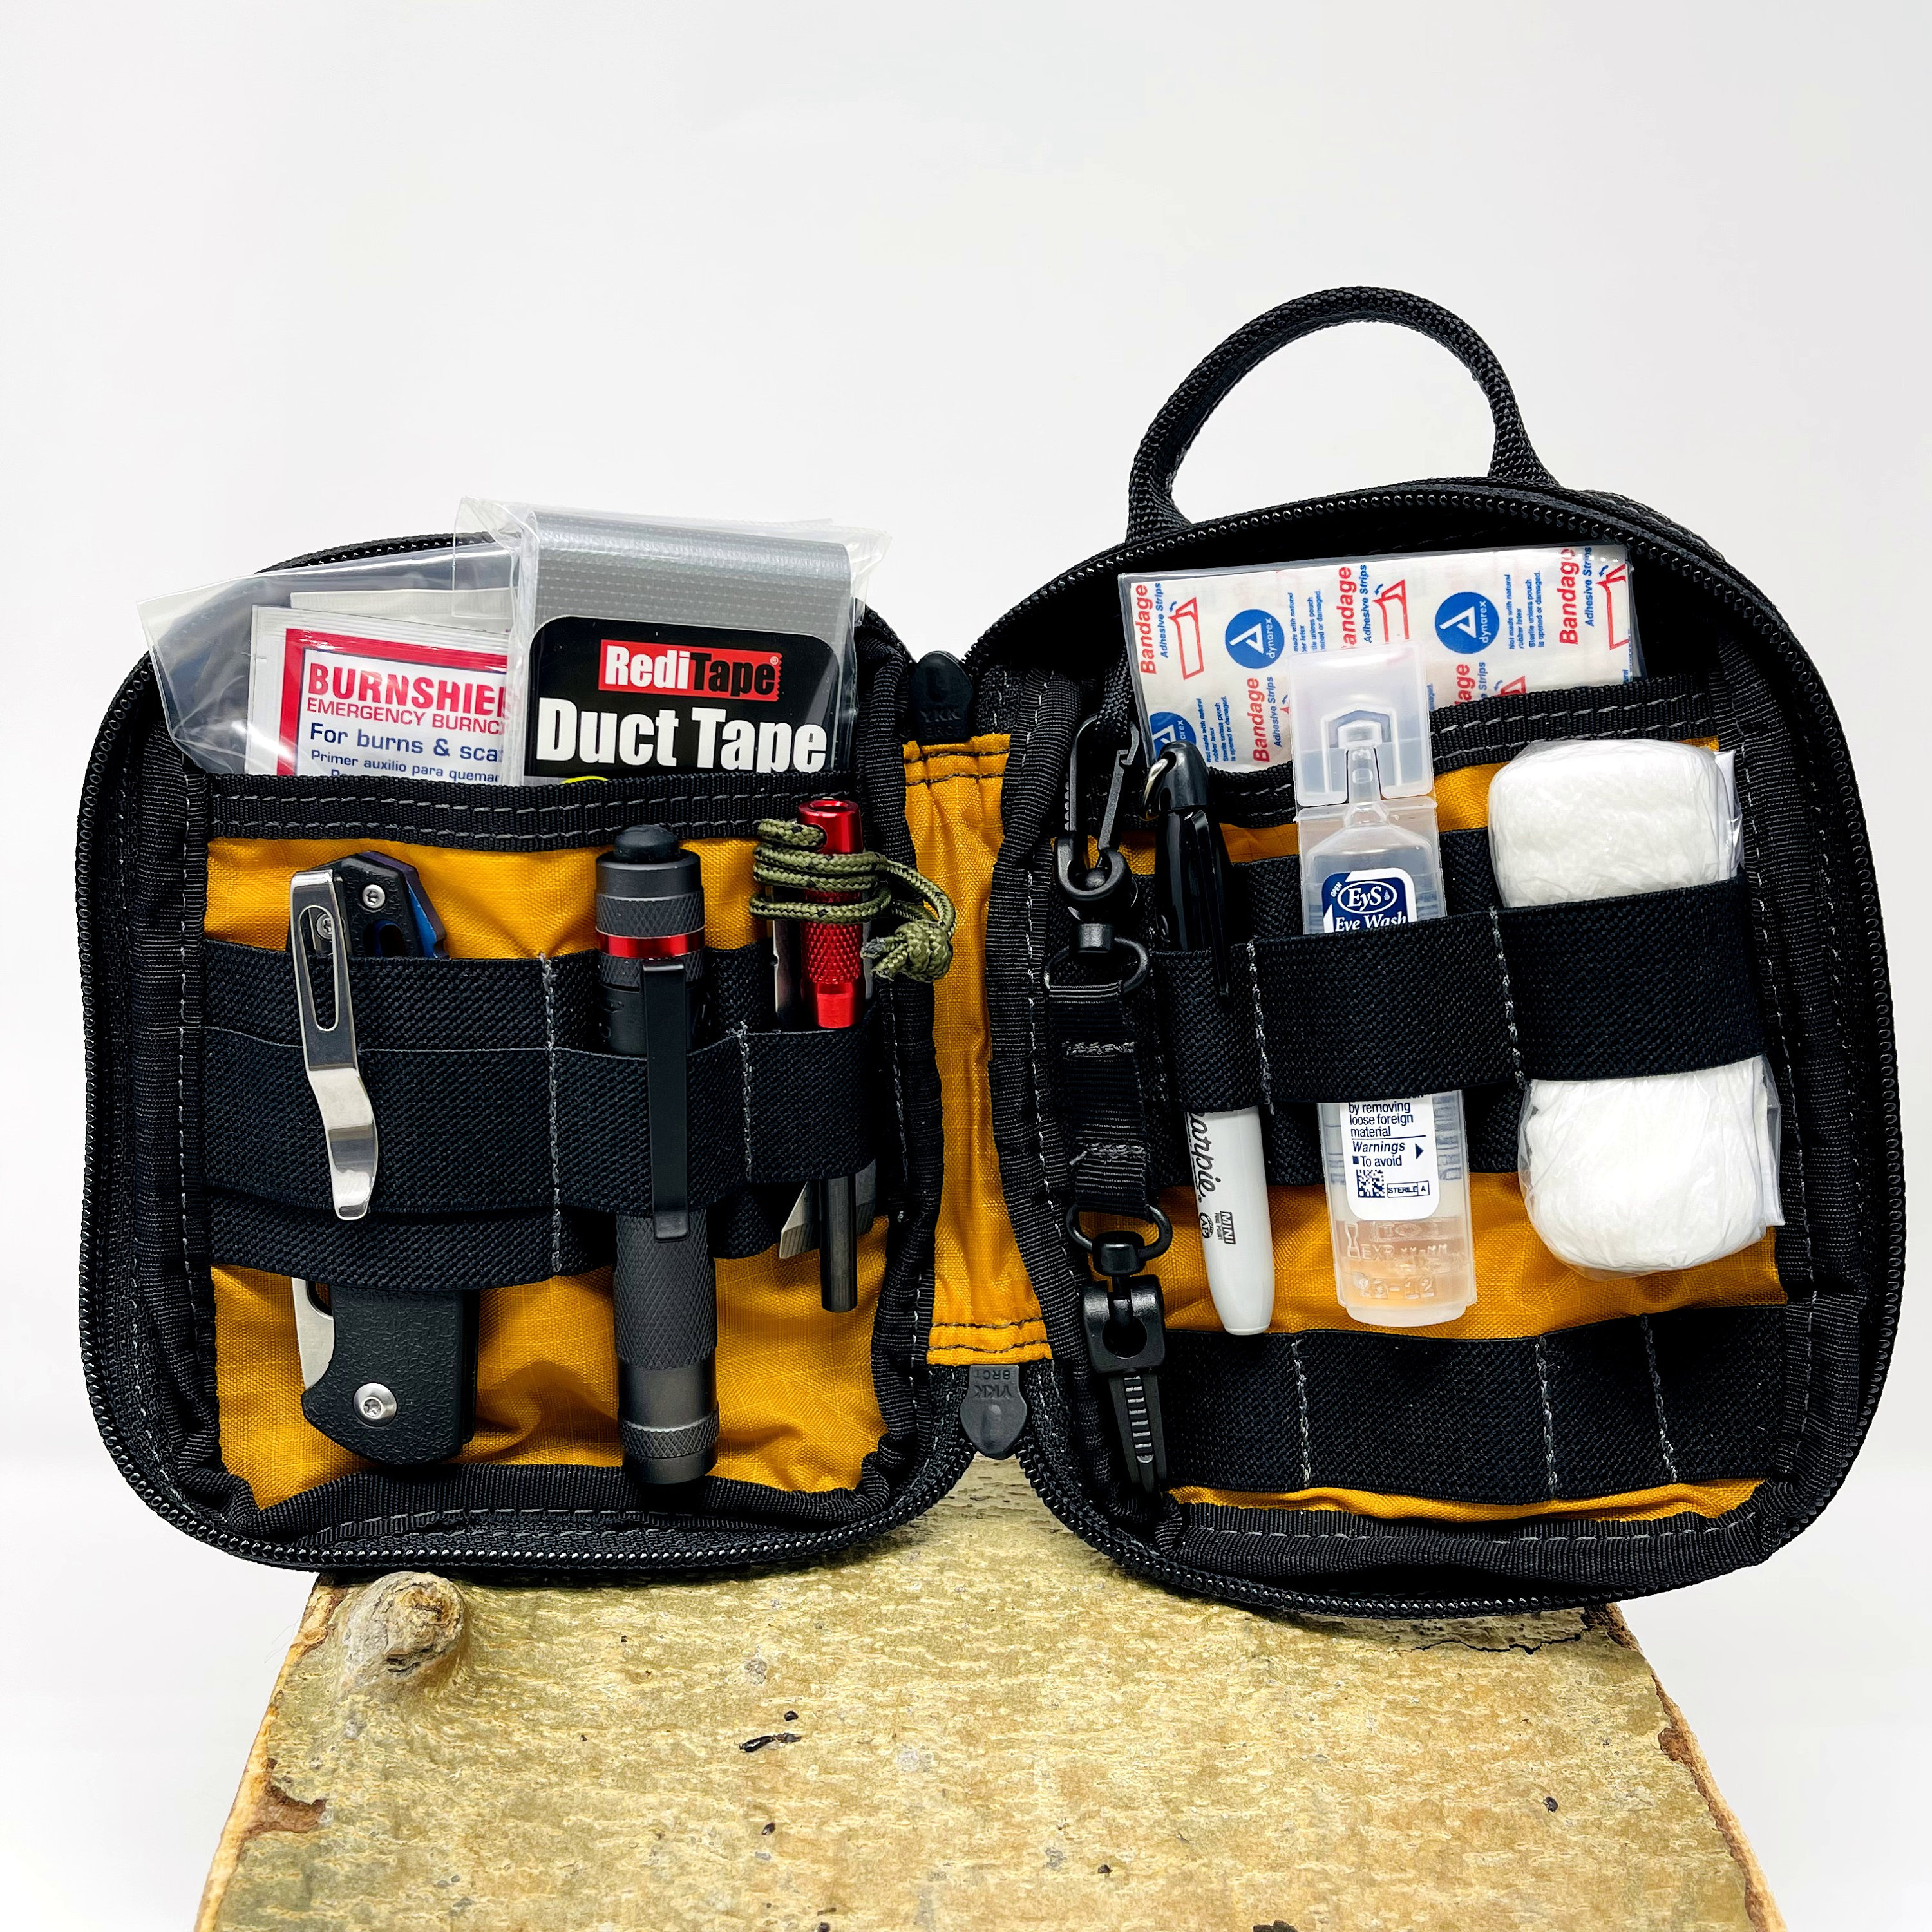 Fatwood EDC Emergency Survival Tin Kit Bushcraft Multi Tools emergency kit prepper BOB 